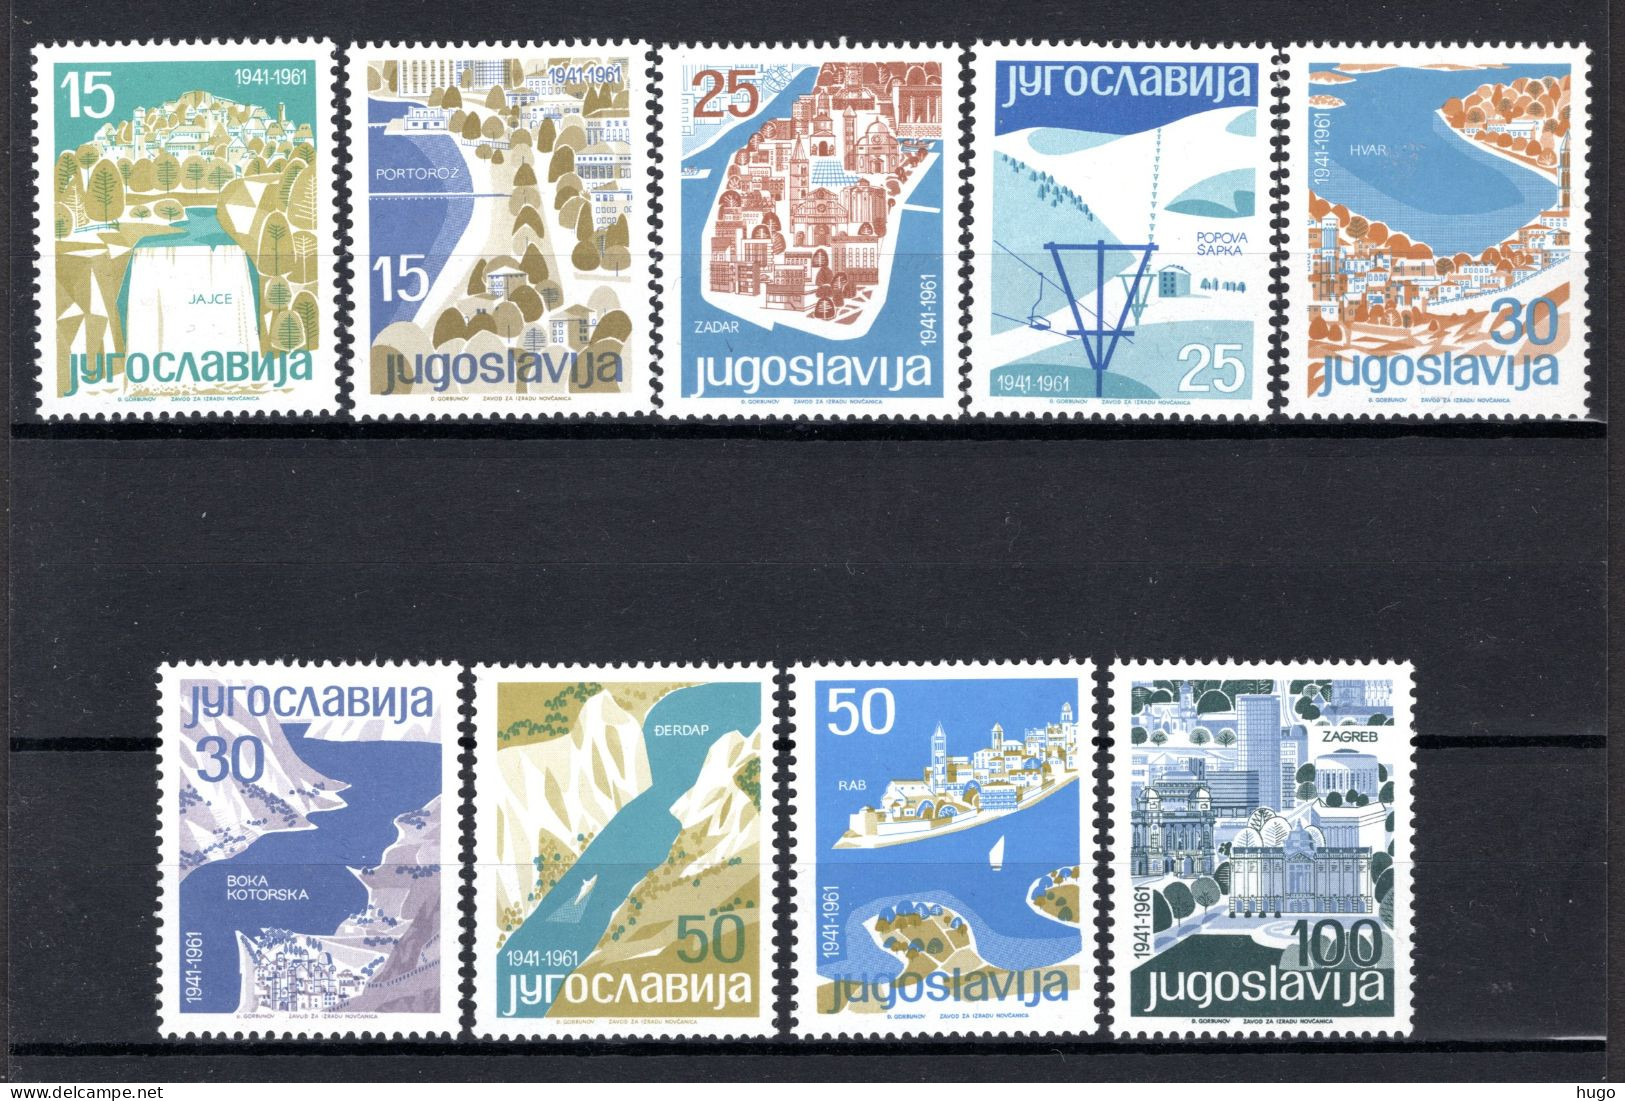 JOEGOSLAVIE Yt. 892/900 MNH 1962 - Unused Stamps